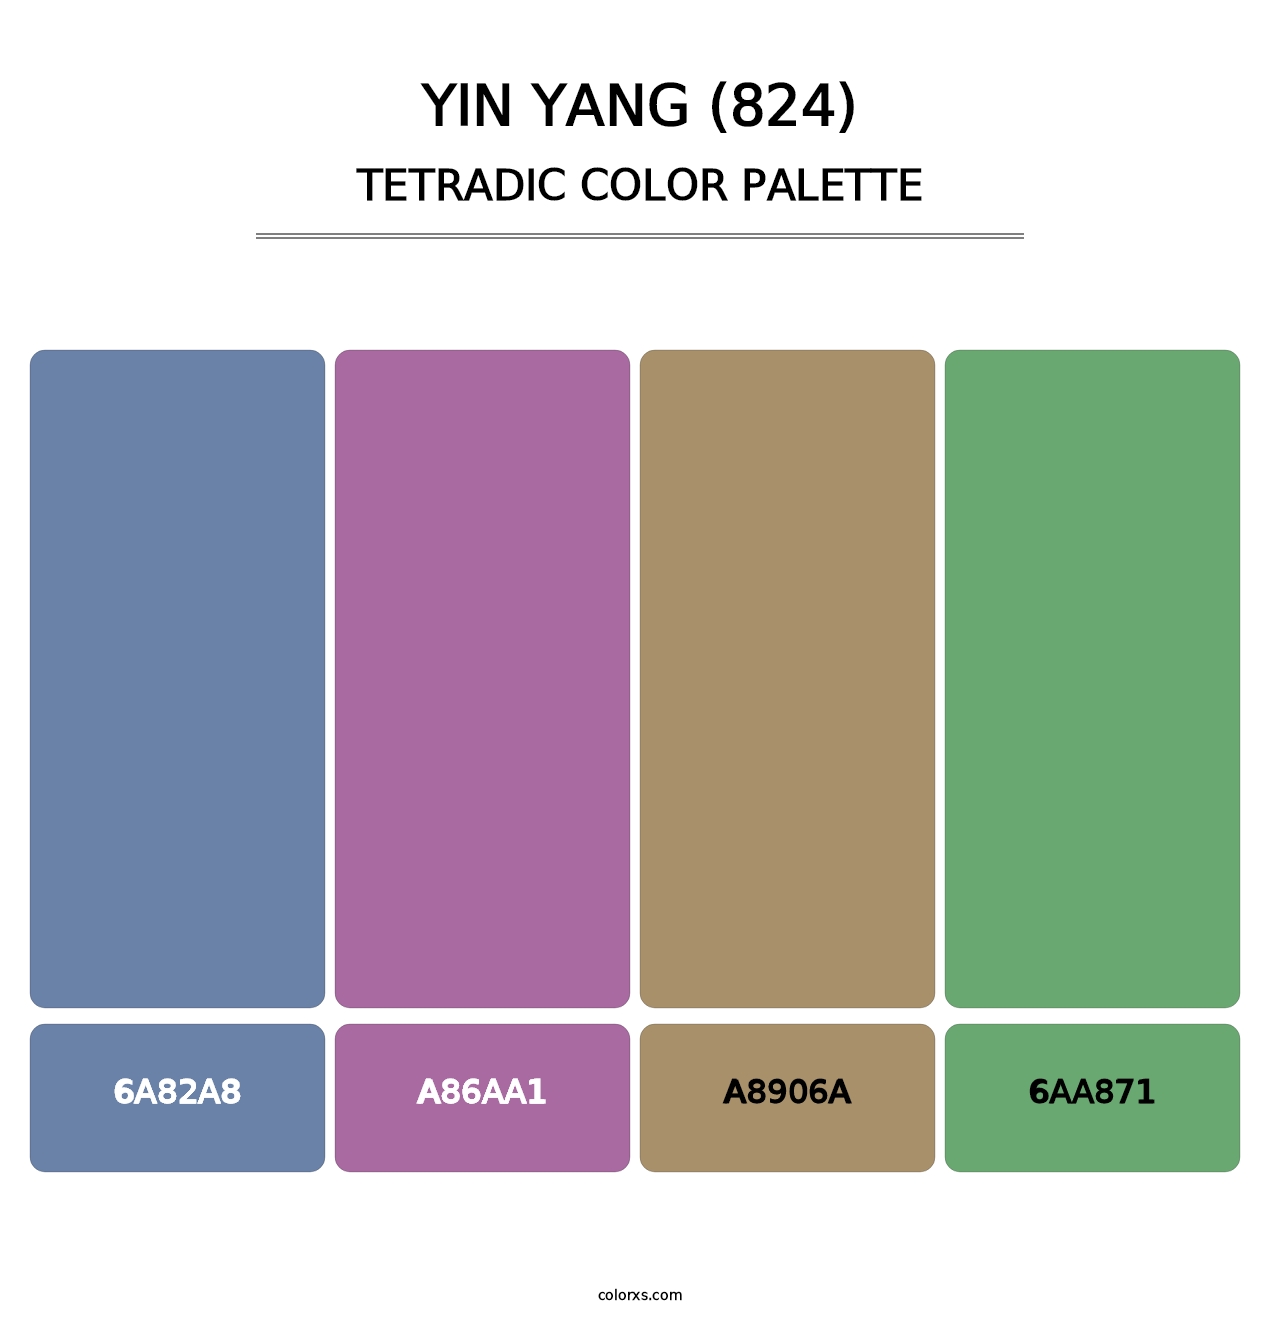 Yin Yang (824) - Tetradic Color Palette